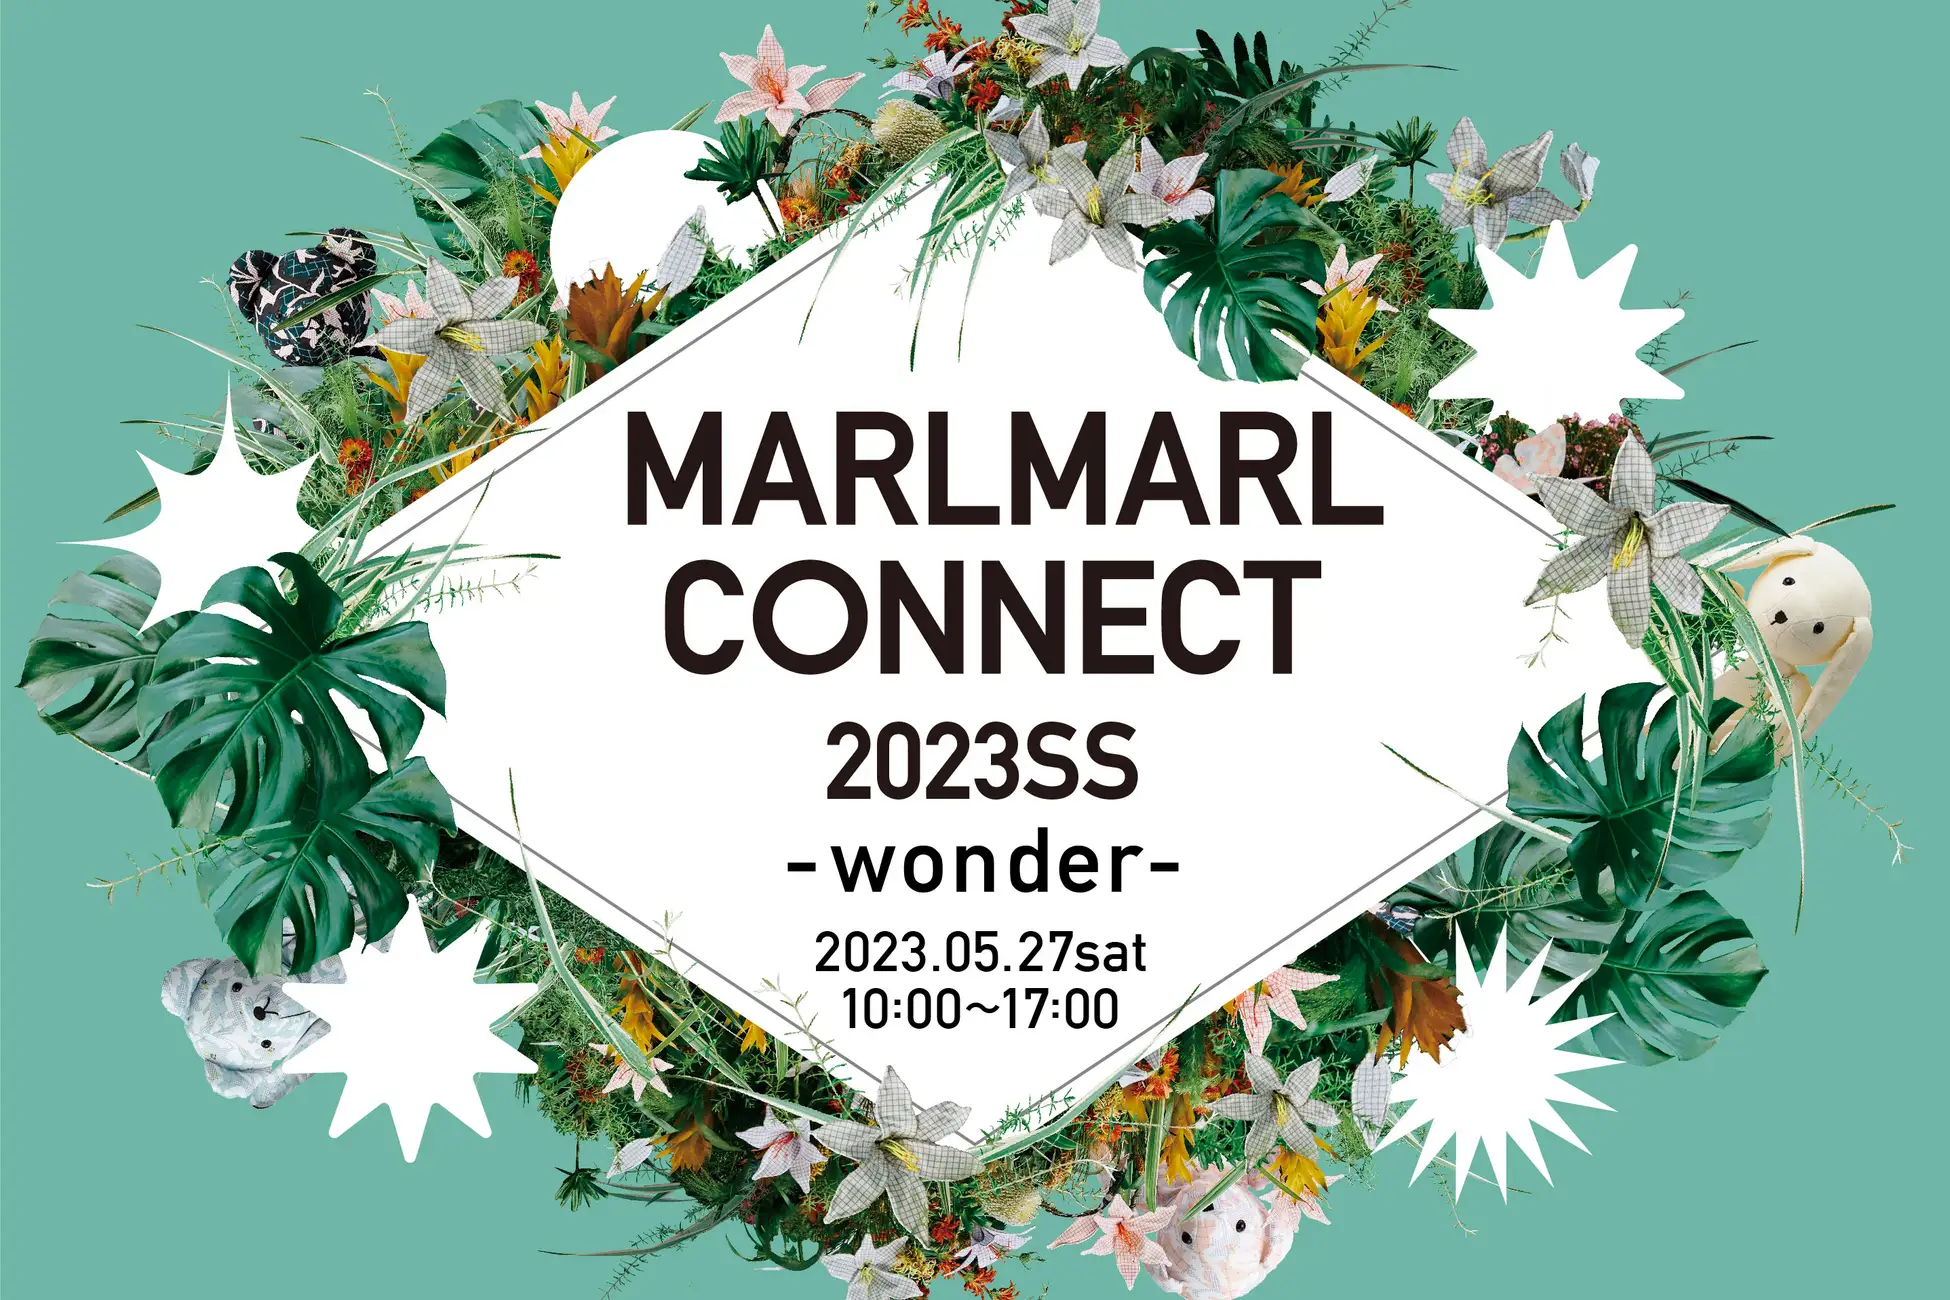 【MARLMARL CONNECT開催】wonderと出会うファミリーイベント5/27@豊洲